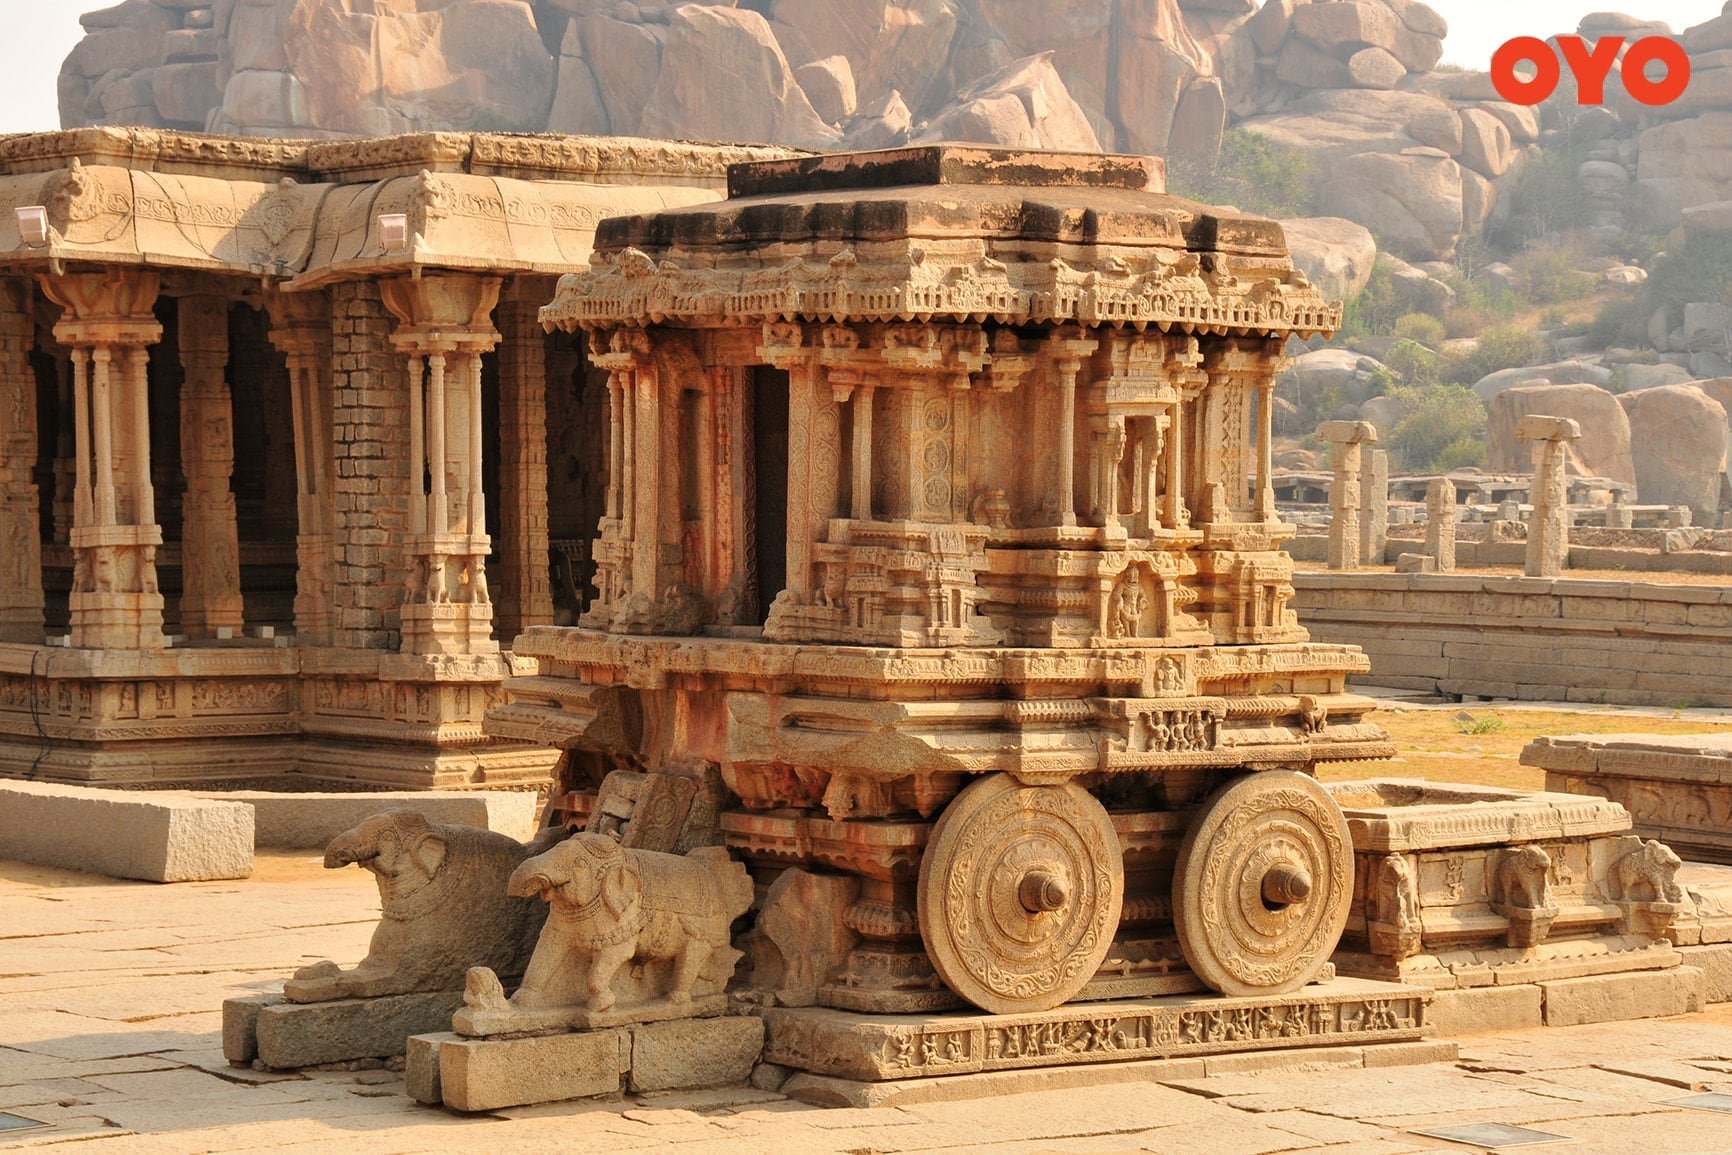 Virupaksha Temple, Karnataka - one of the most famous historical monuments in India